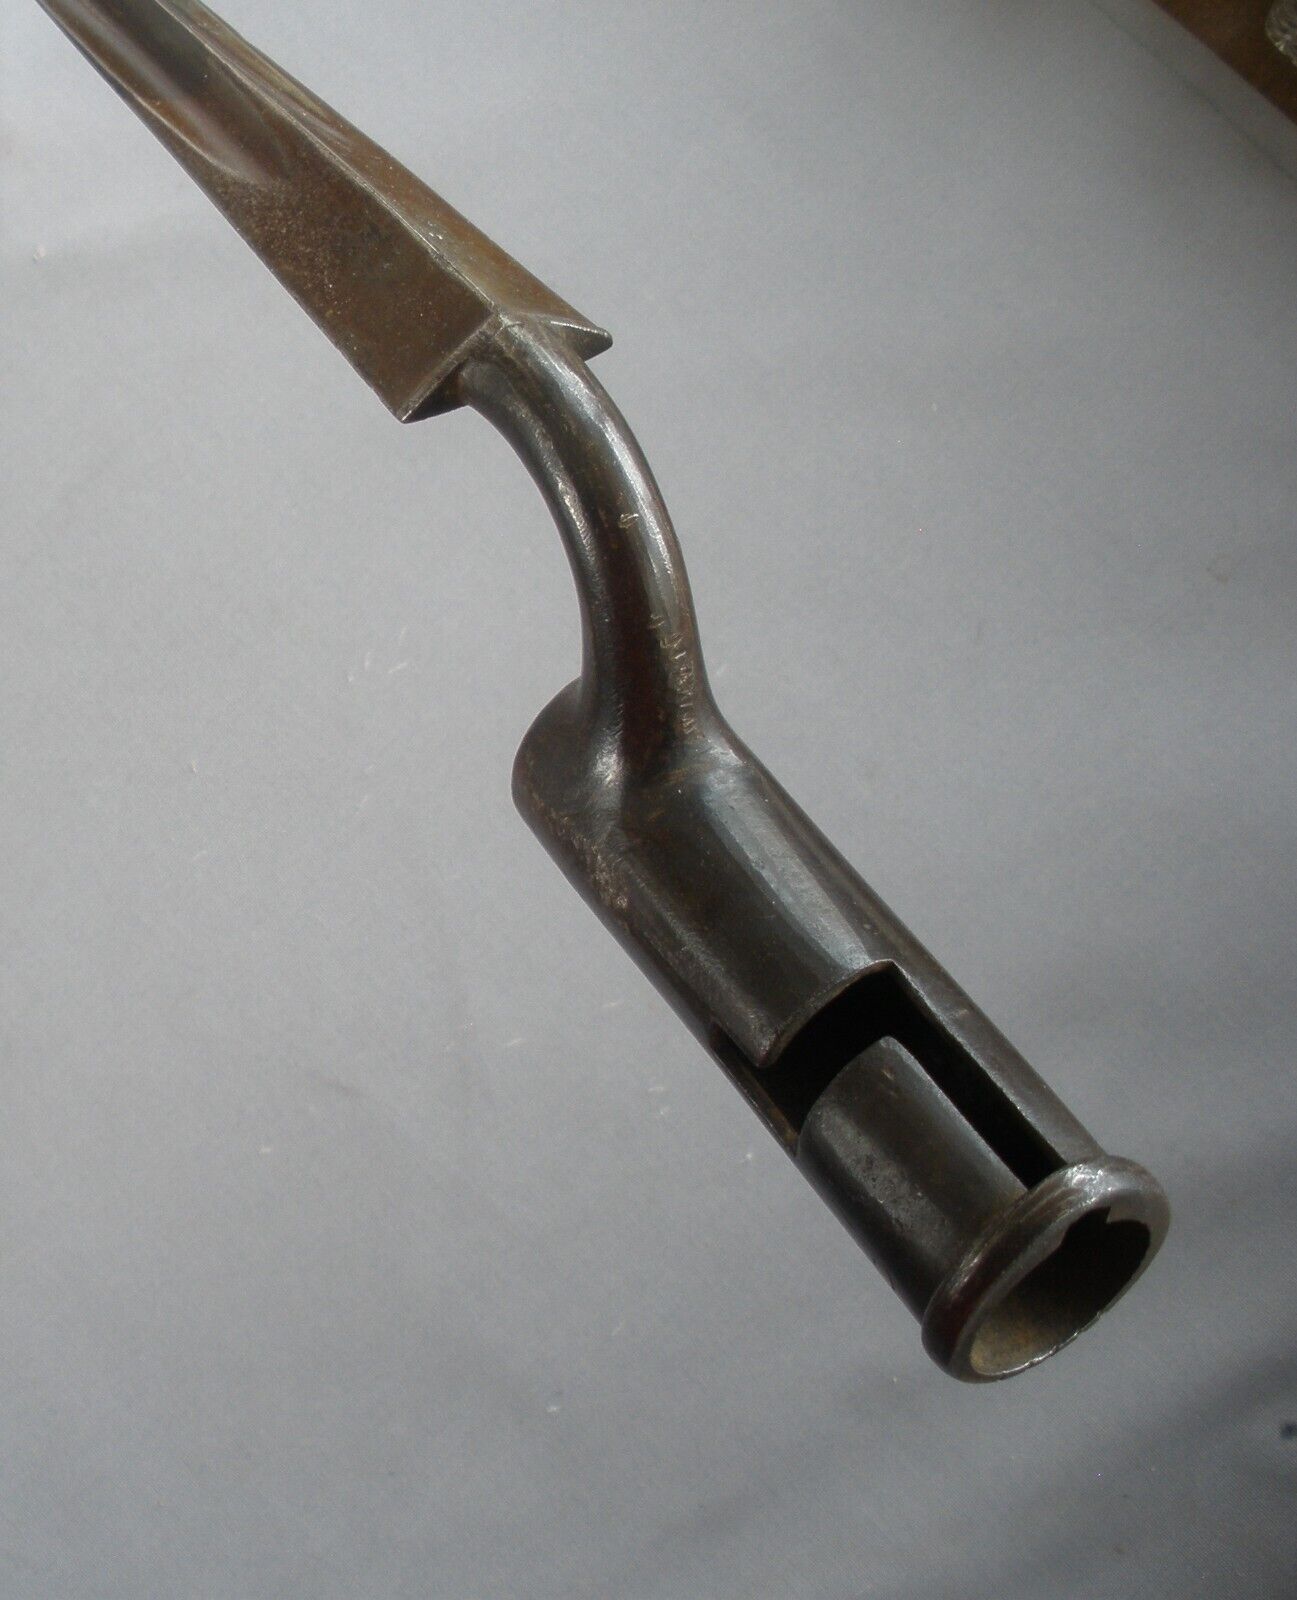 Antique Brown Bess socket bayonet for flintlock musket, engraved 62 & crown/S